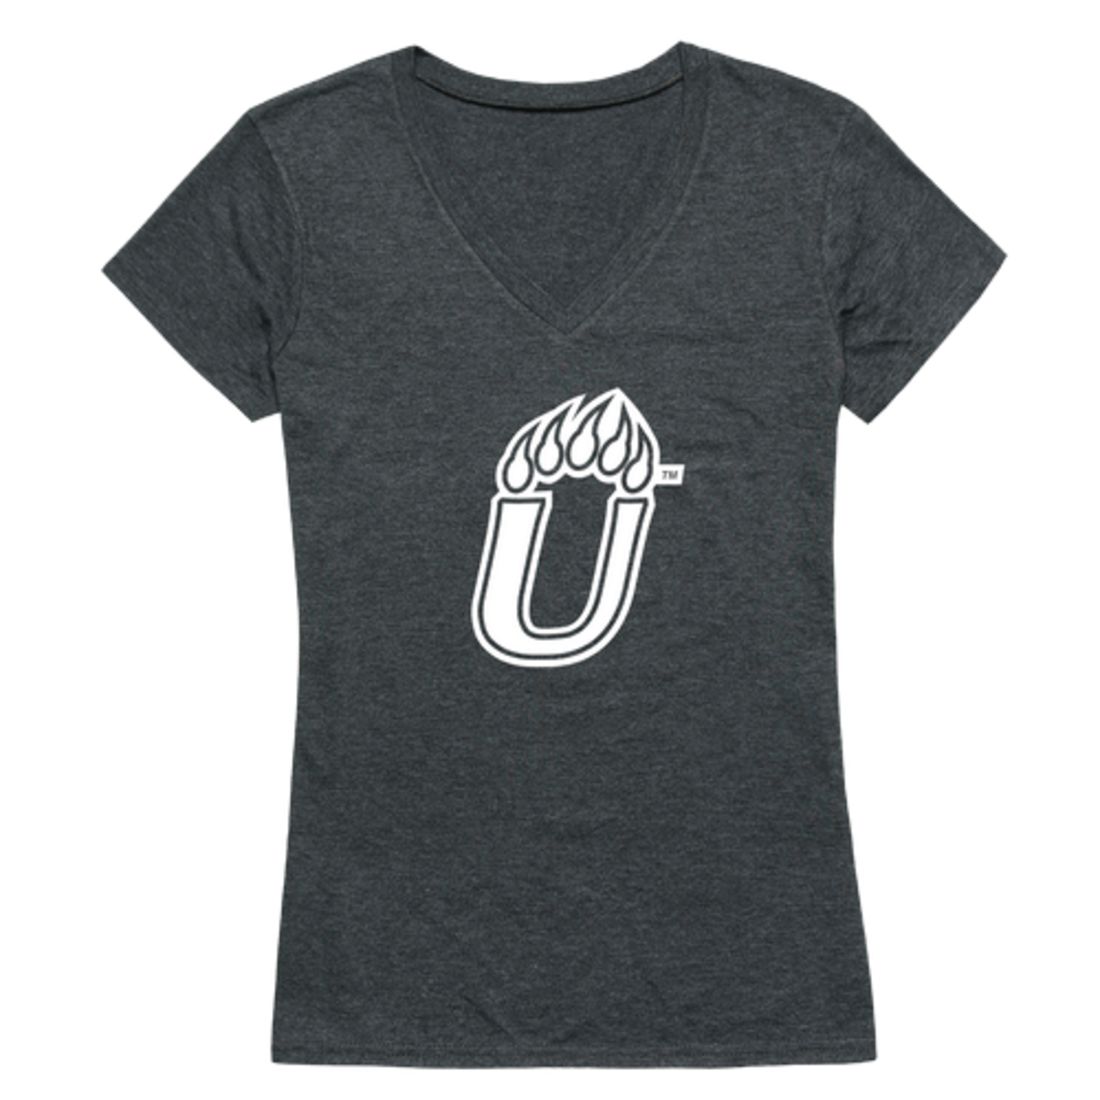 Adams State University Grizzlies Womens Institutional T-Shirt Tee